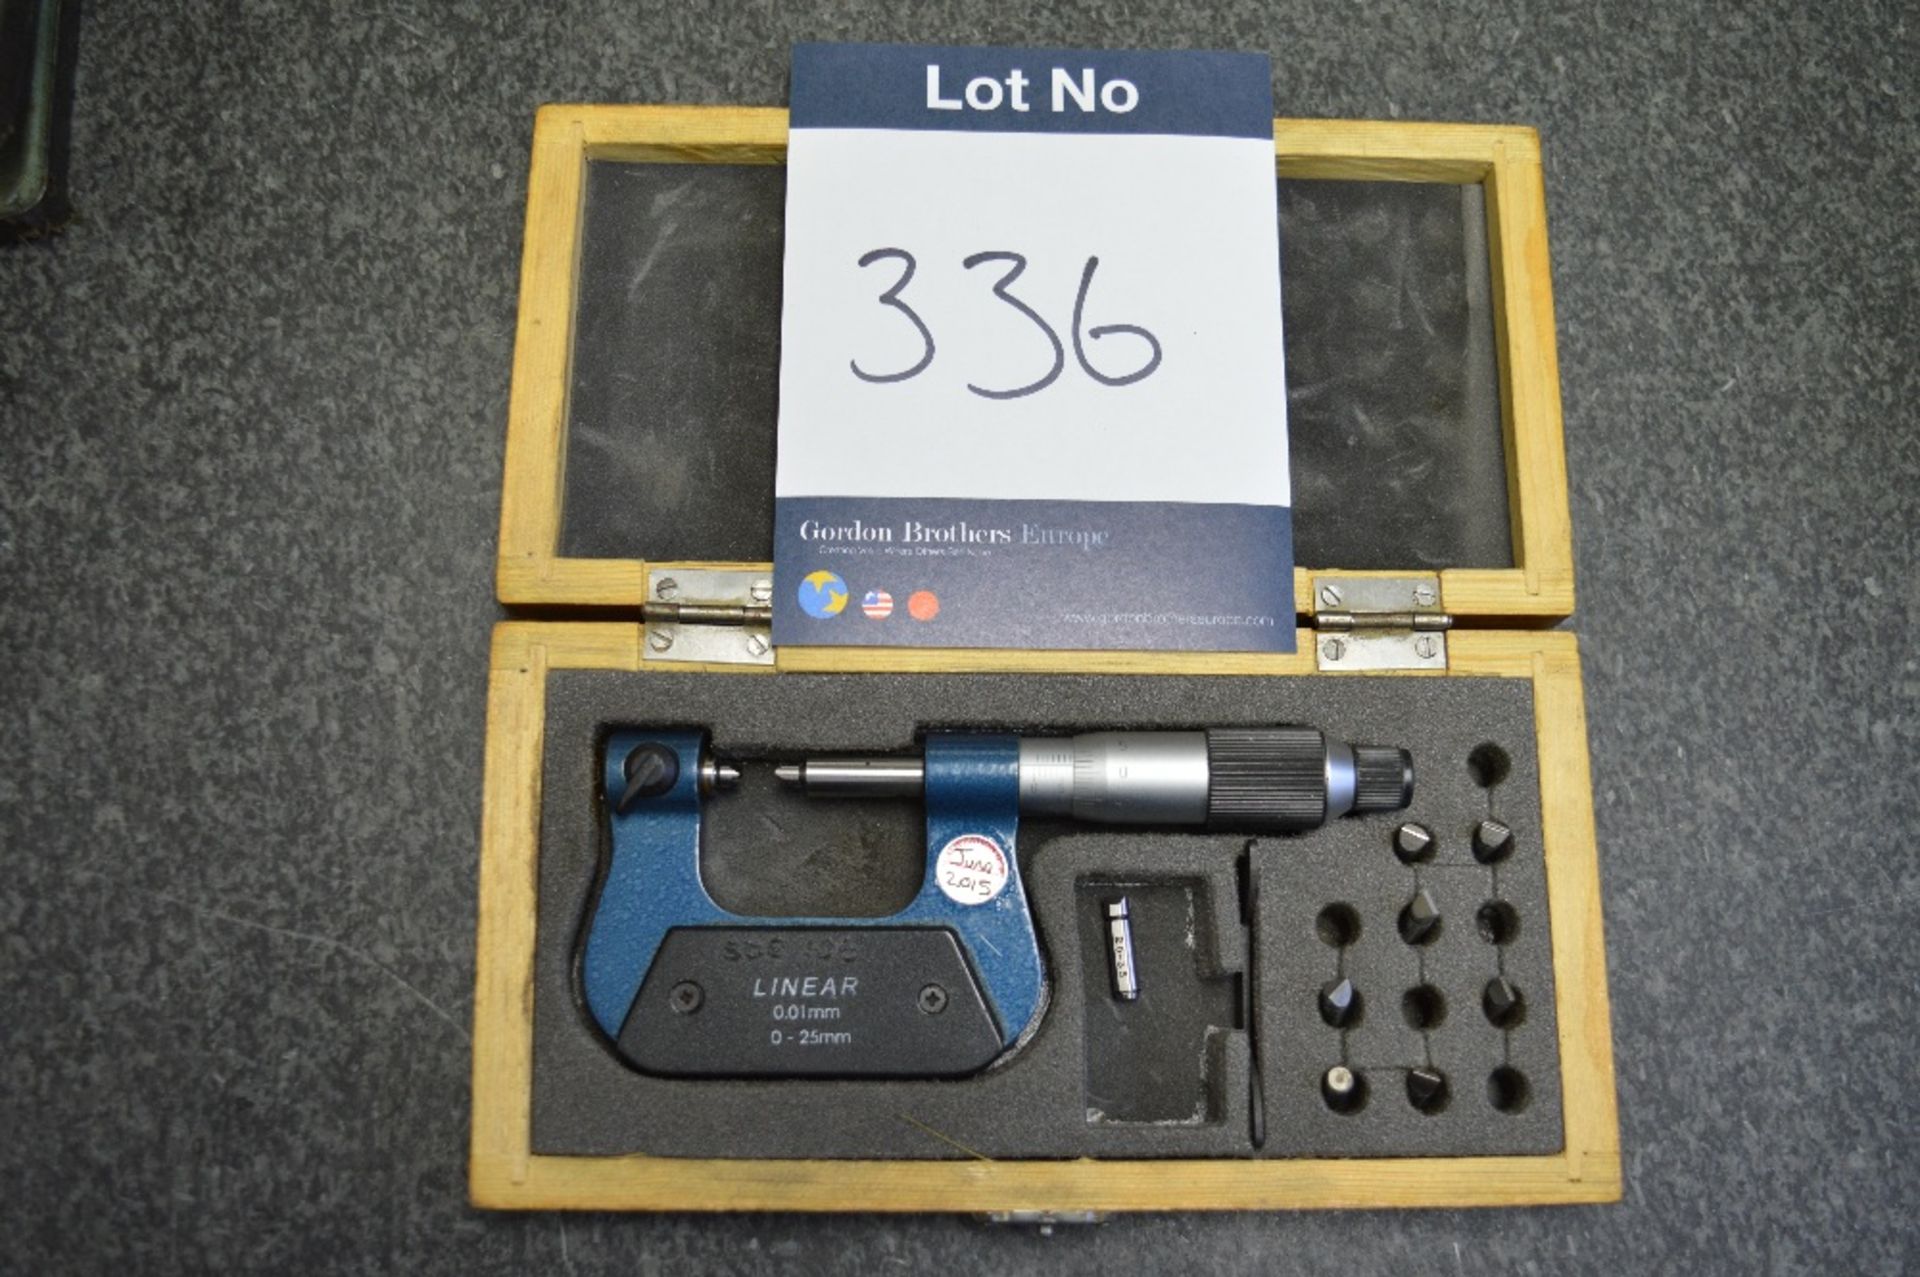 Linear 0-25mm Micrometer
Serial Number: SDE106